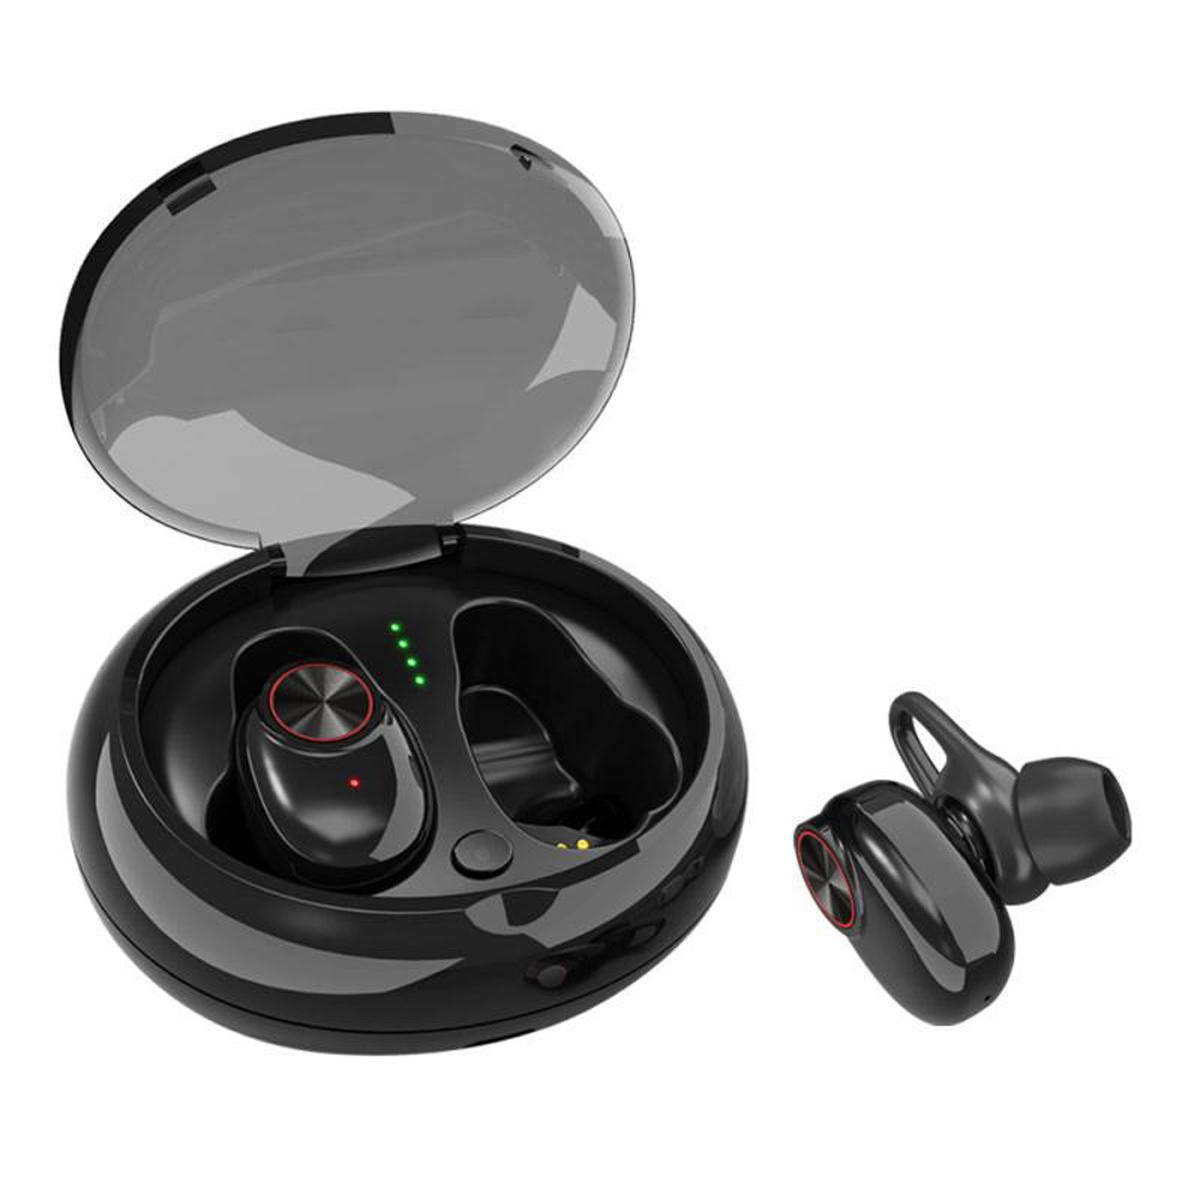 [Bluetooth 5.0] Echte draadloze oordopjes Ruisonderdrukkende hoofdtelefoon Deep Bass HD 3D Stereo Su